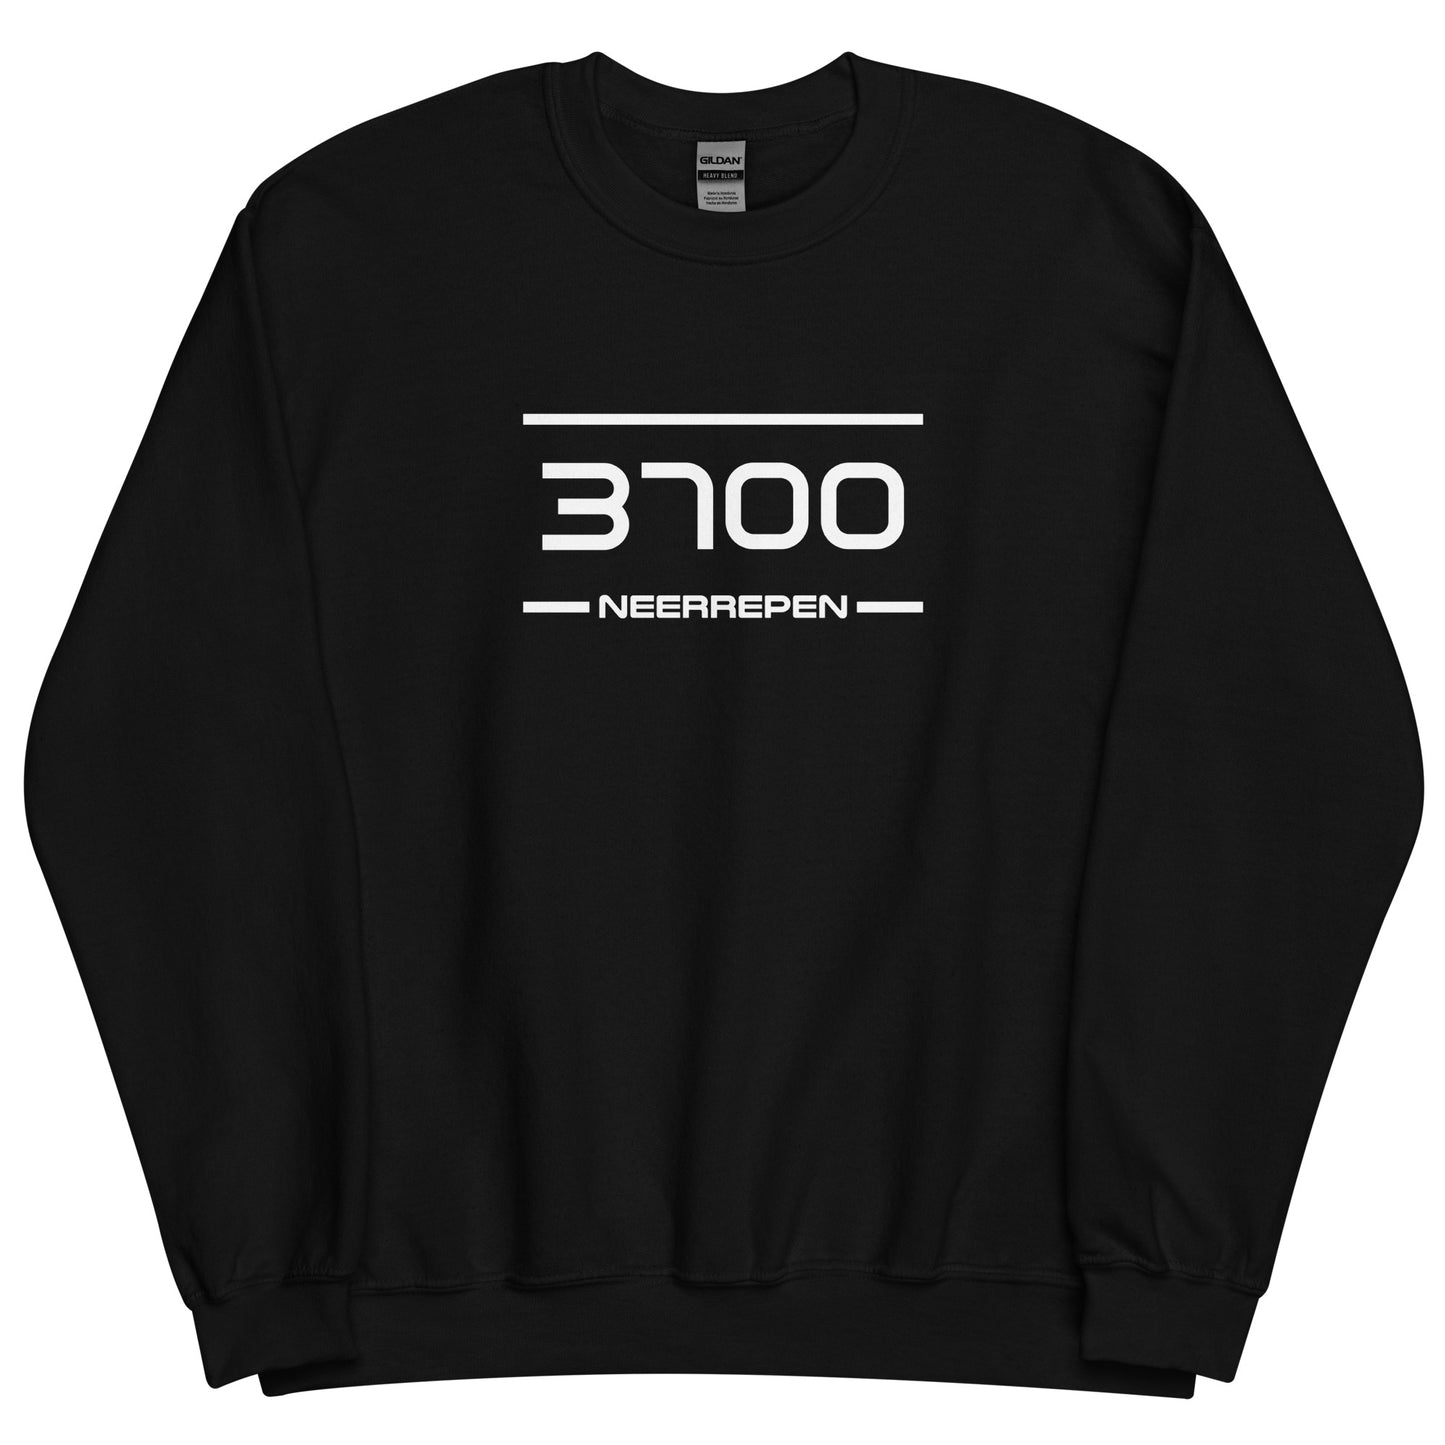 Sweater - 3700 - Neerrepen (M/V)